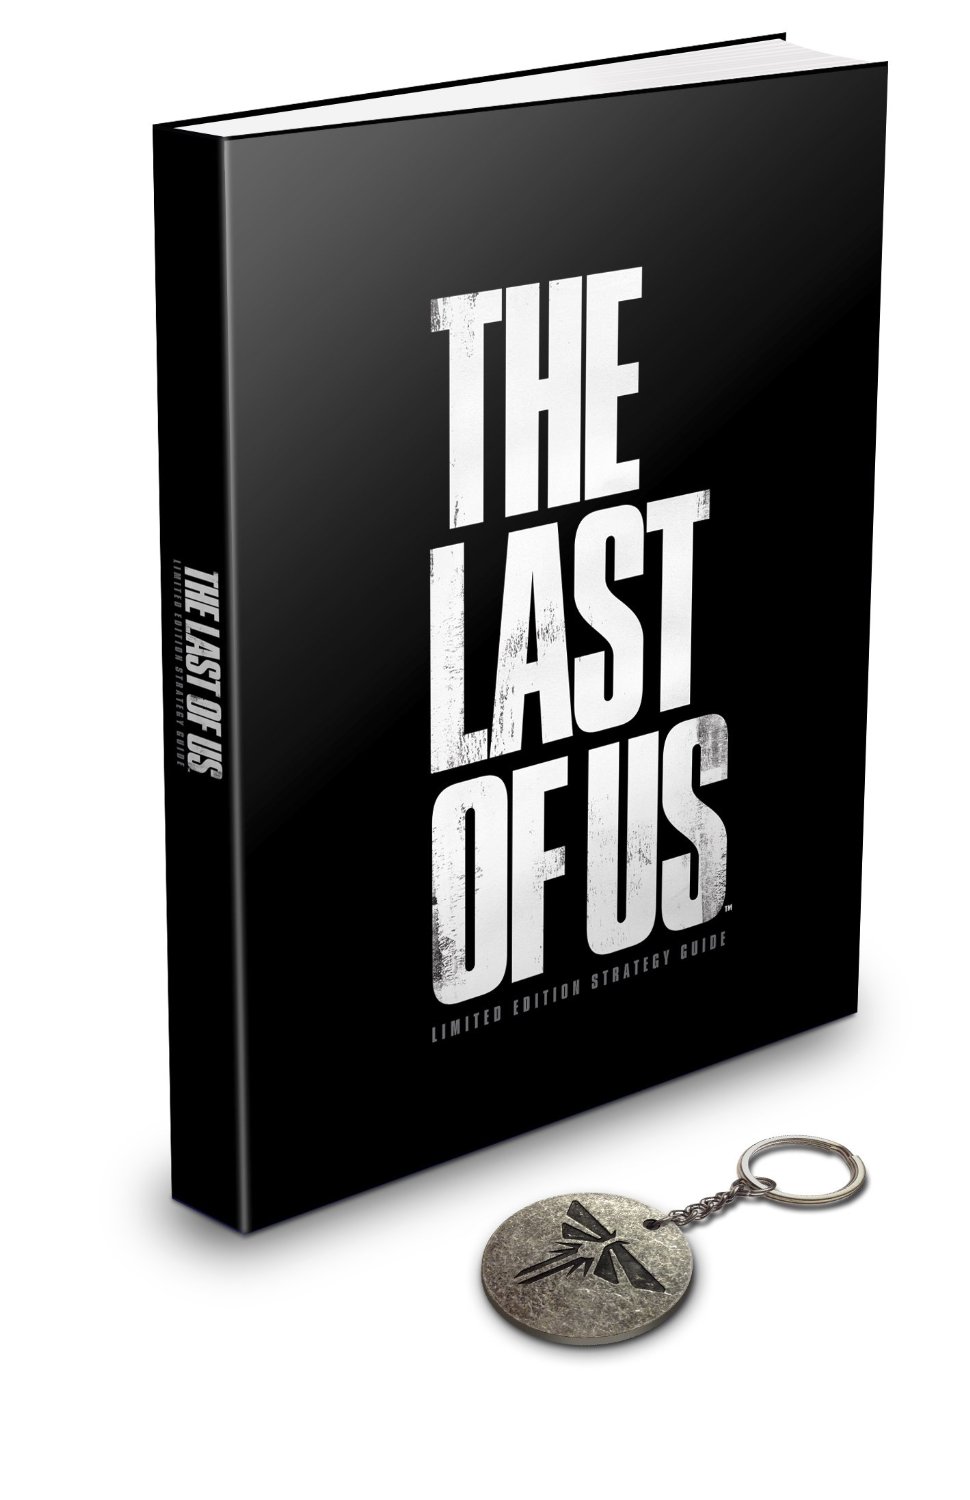 He gives books to us. The last of us книга. The last of us коллекционное издание. The last of us книга вещи. Here's to us книга.